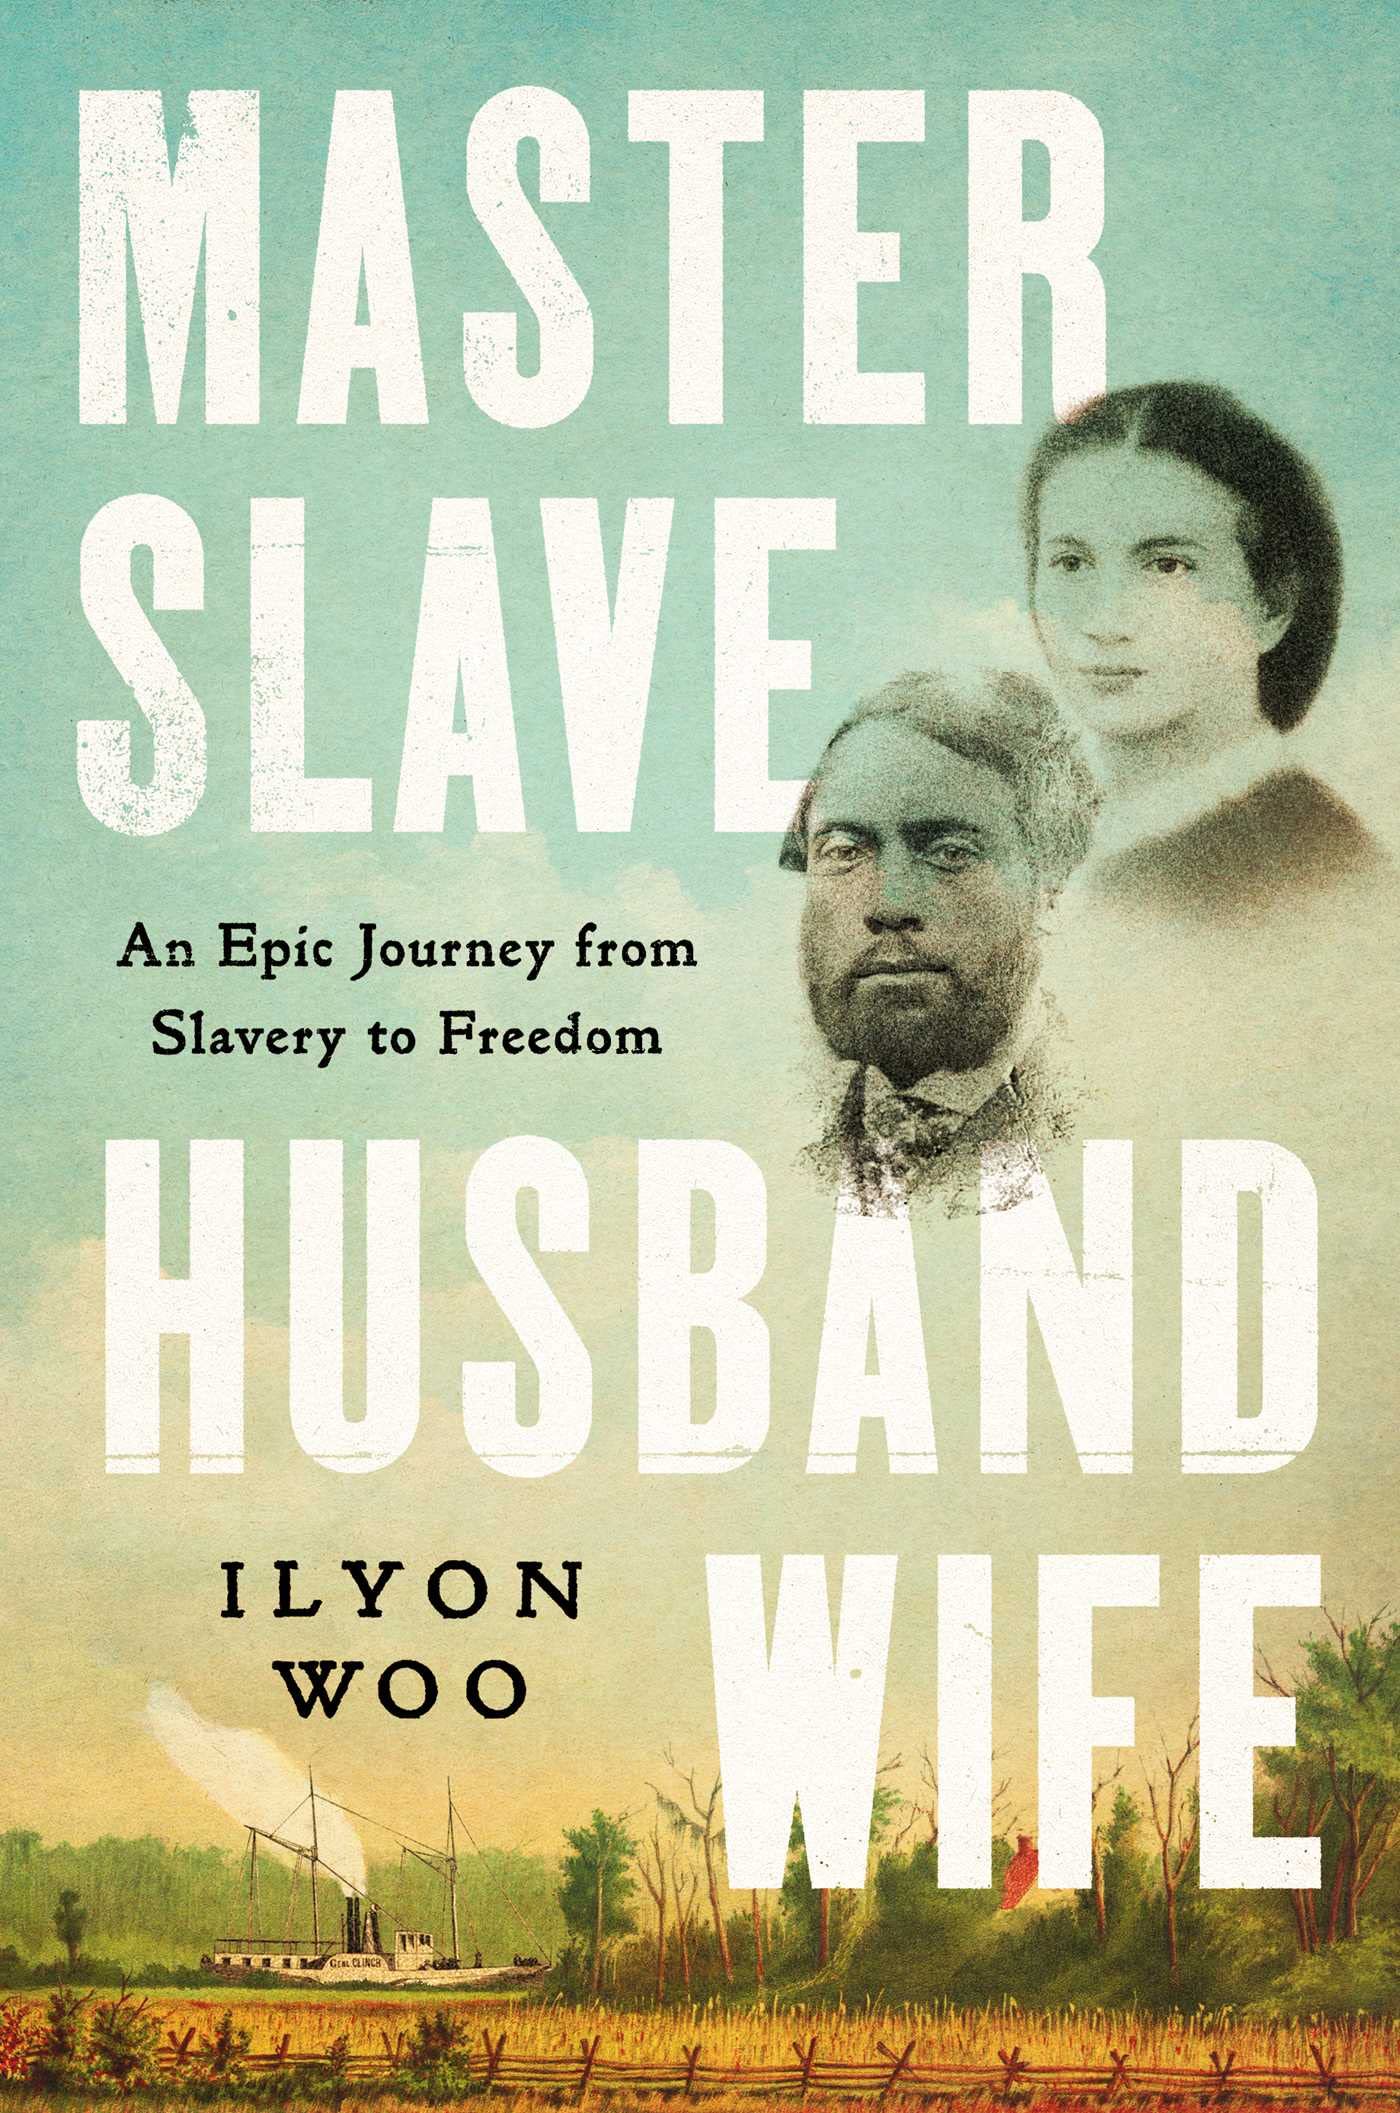 Image for "Master Slave Husband Wife"